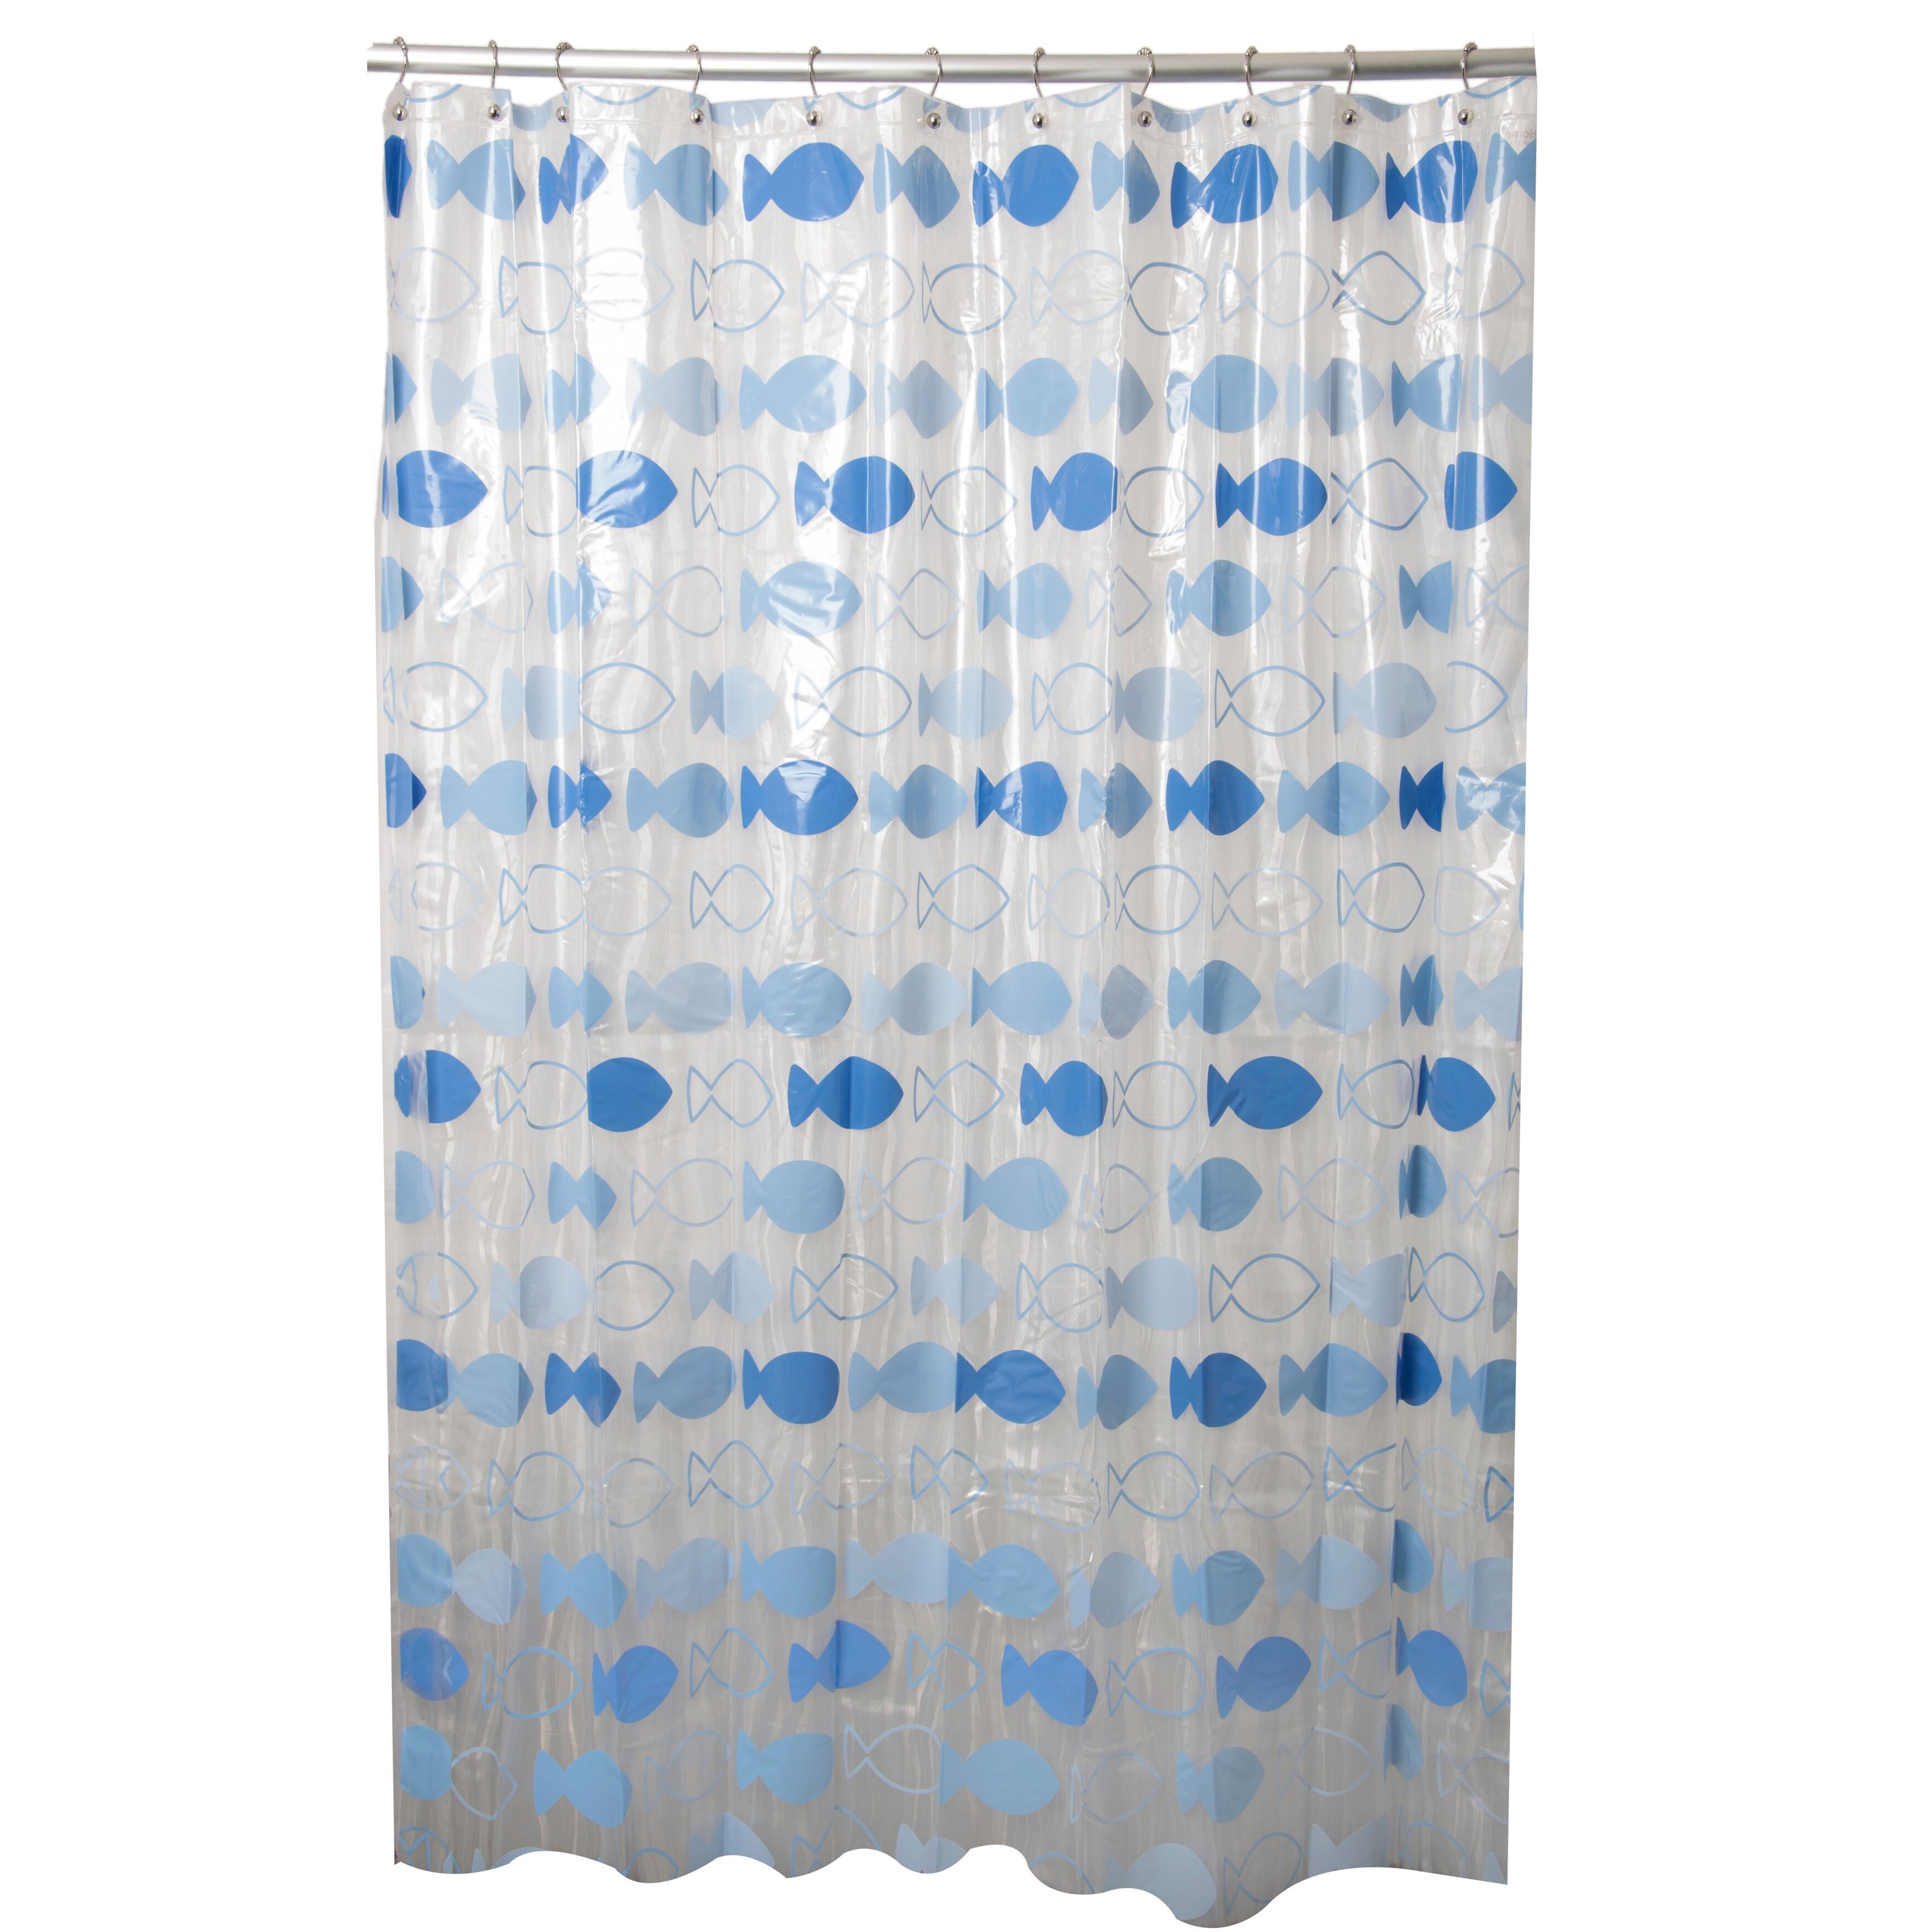 Fashions Shower Curtains Upc, Waverly Pom Pom Play Confetti Shower Curtain